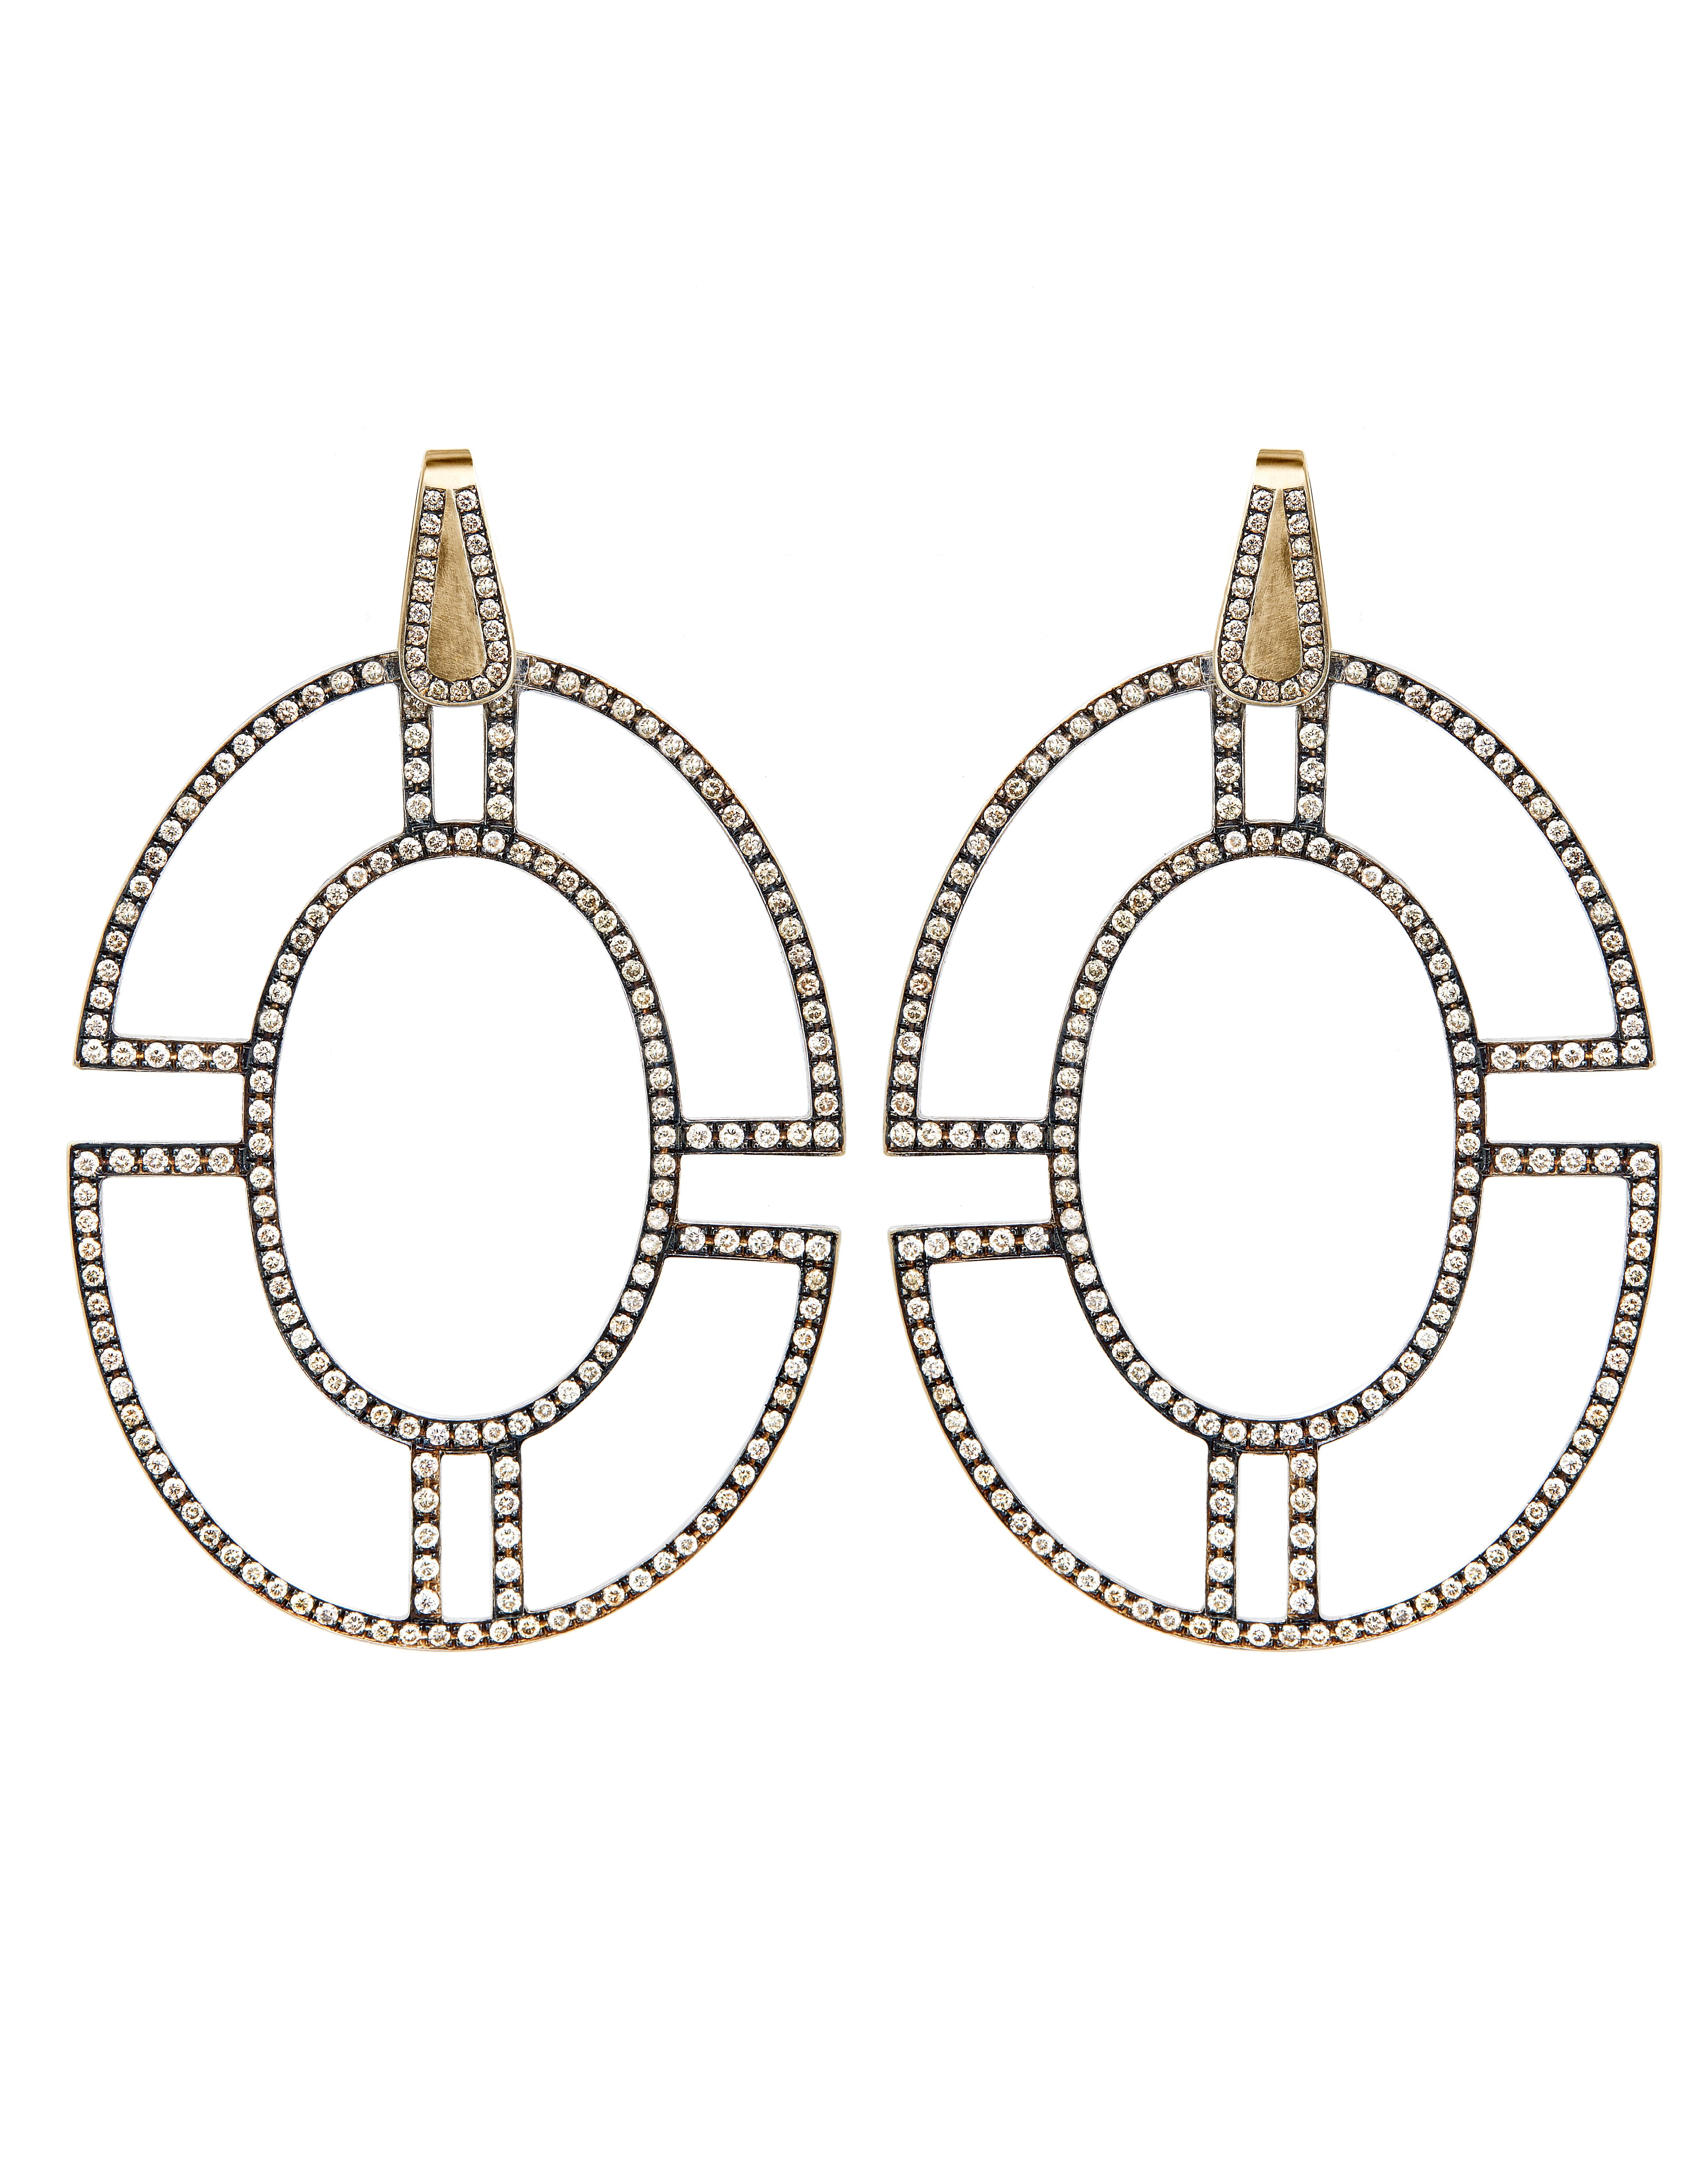 Brilliant Cut Polina Ellis Champagne Diamonds 18k Raw White Gold Earrings For Sale